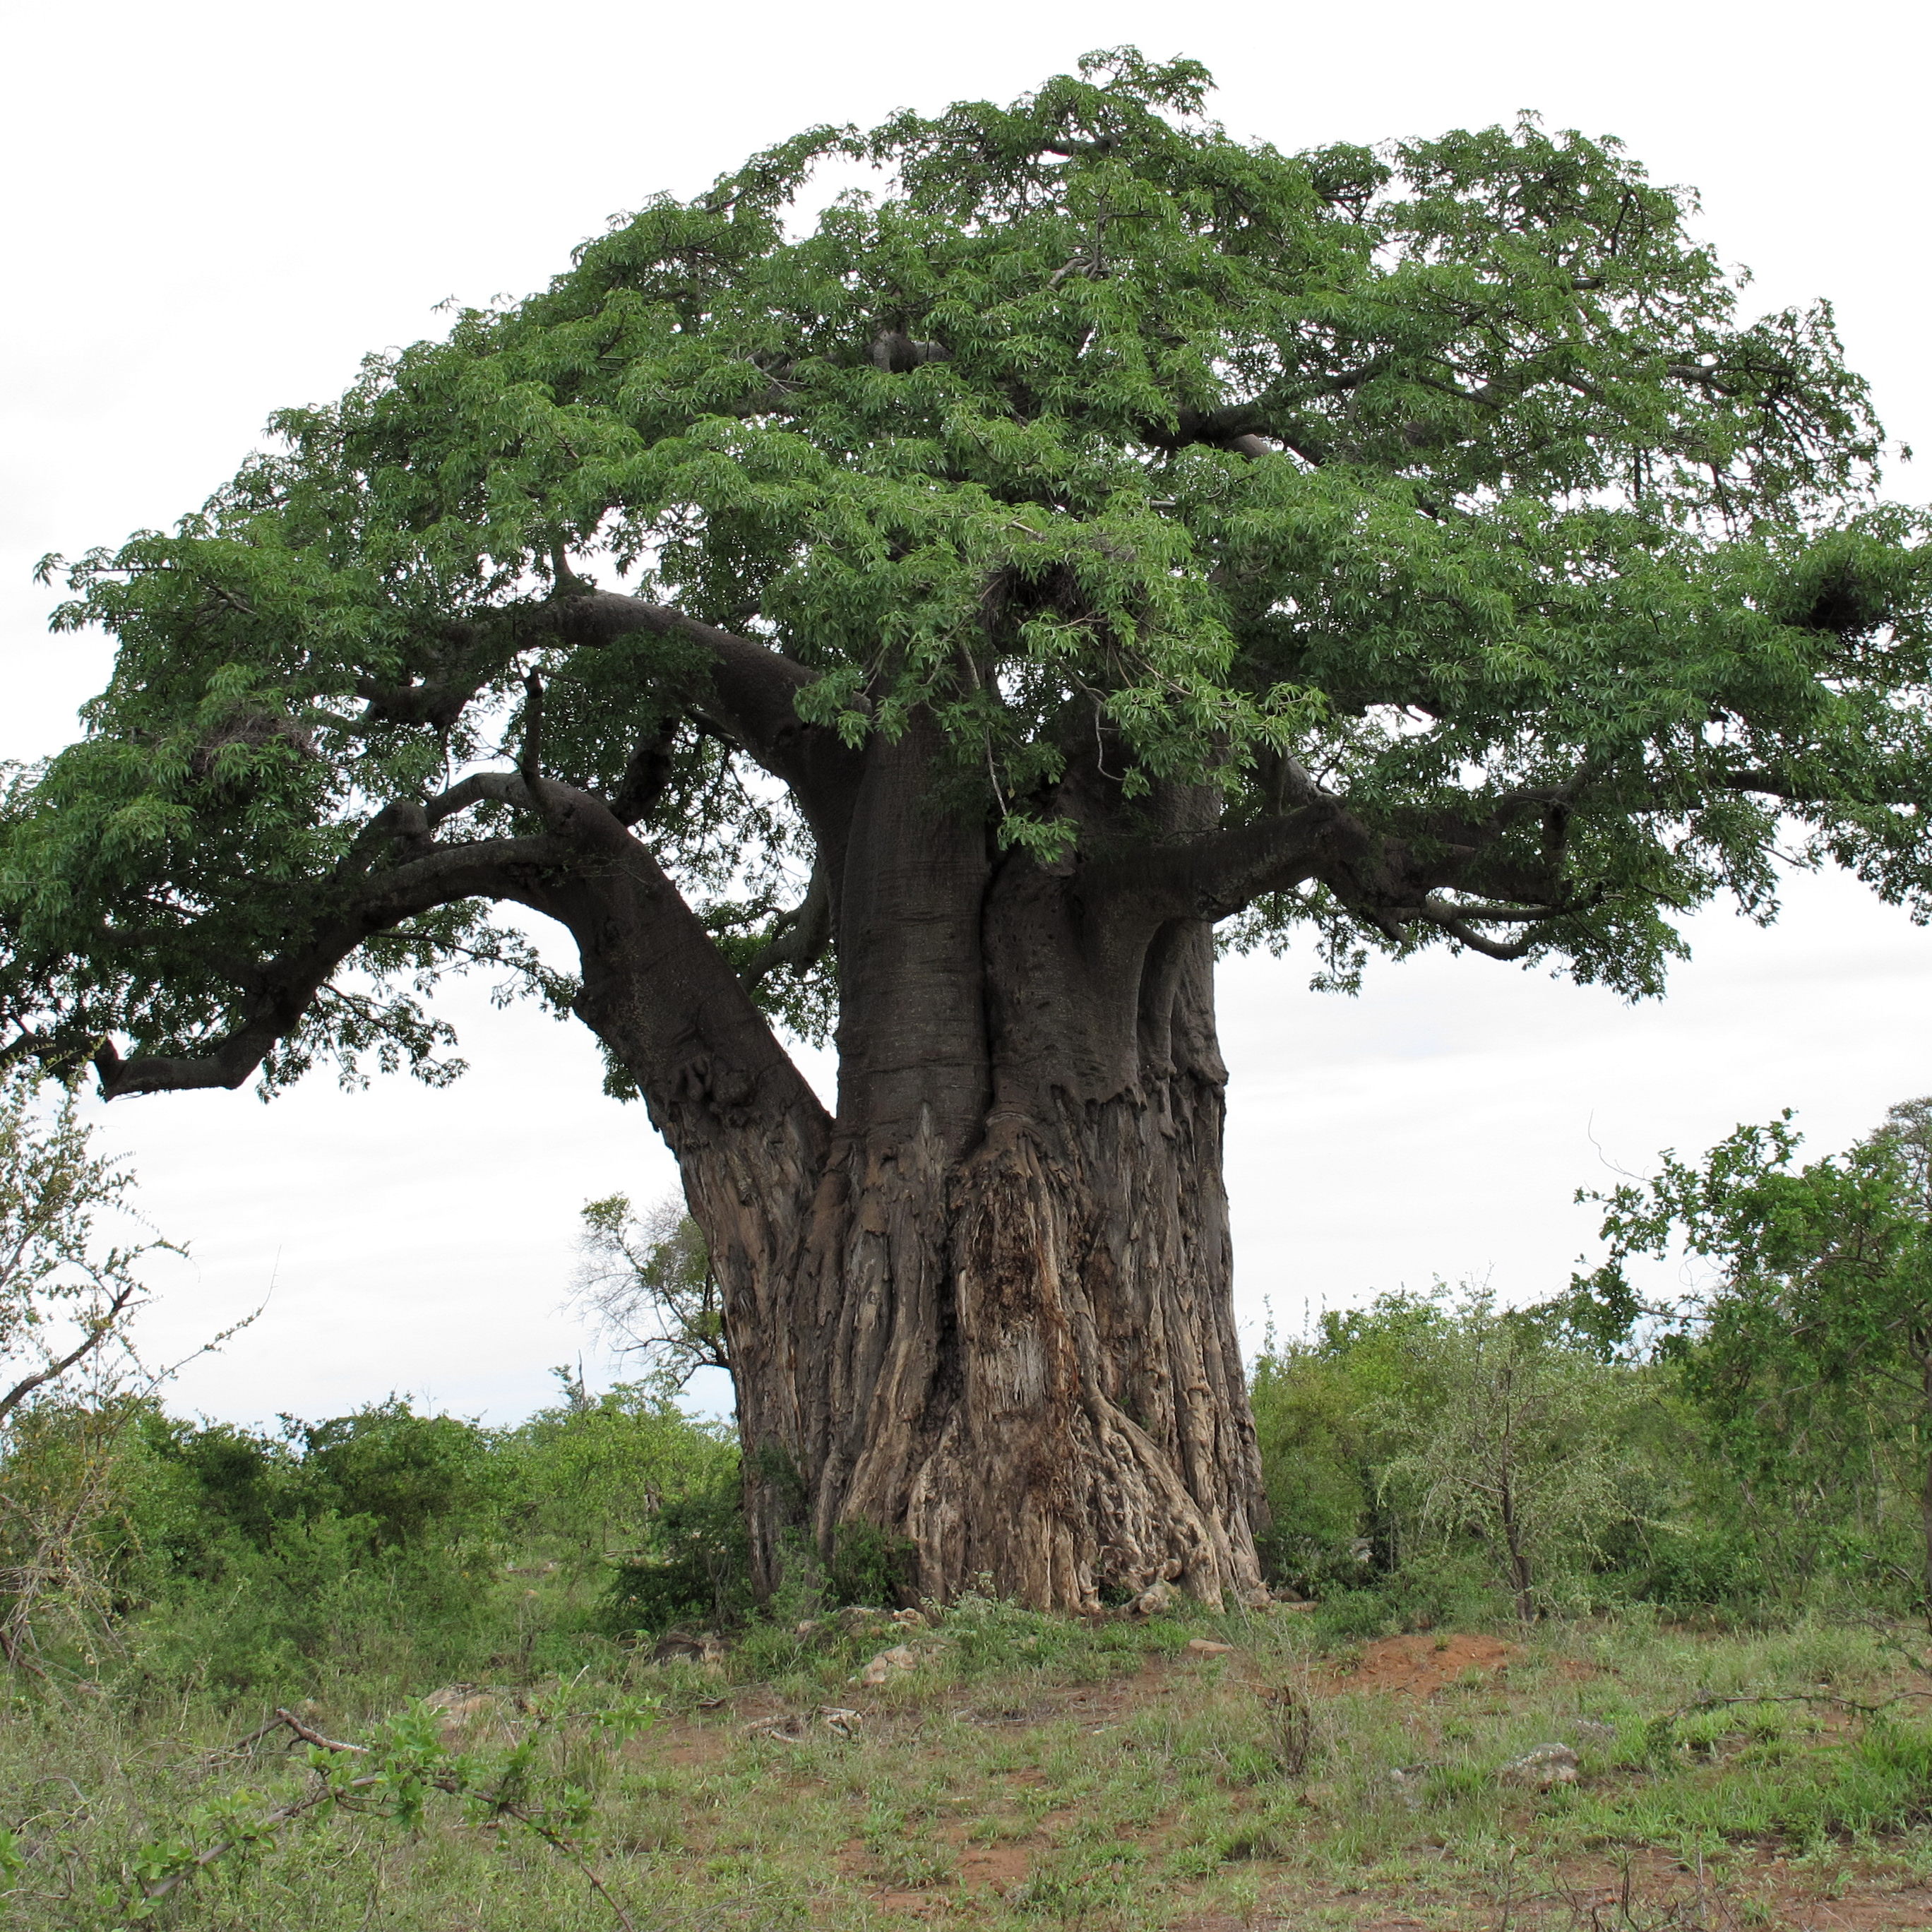 Ба баб. Дерево в Африке баобаб. Баобаб ЮАР. Крона баобаба. Баобаб в саванне.